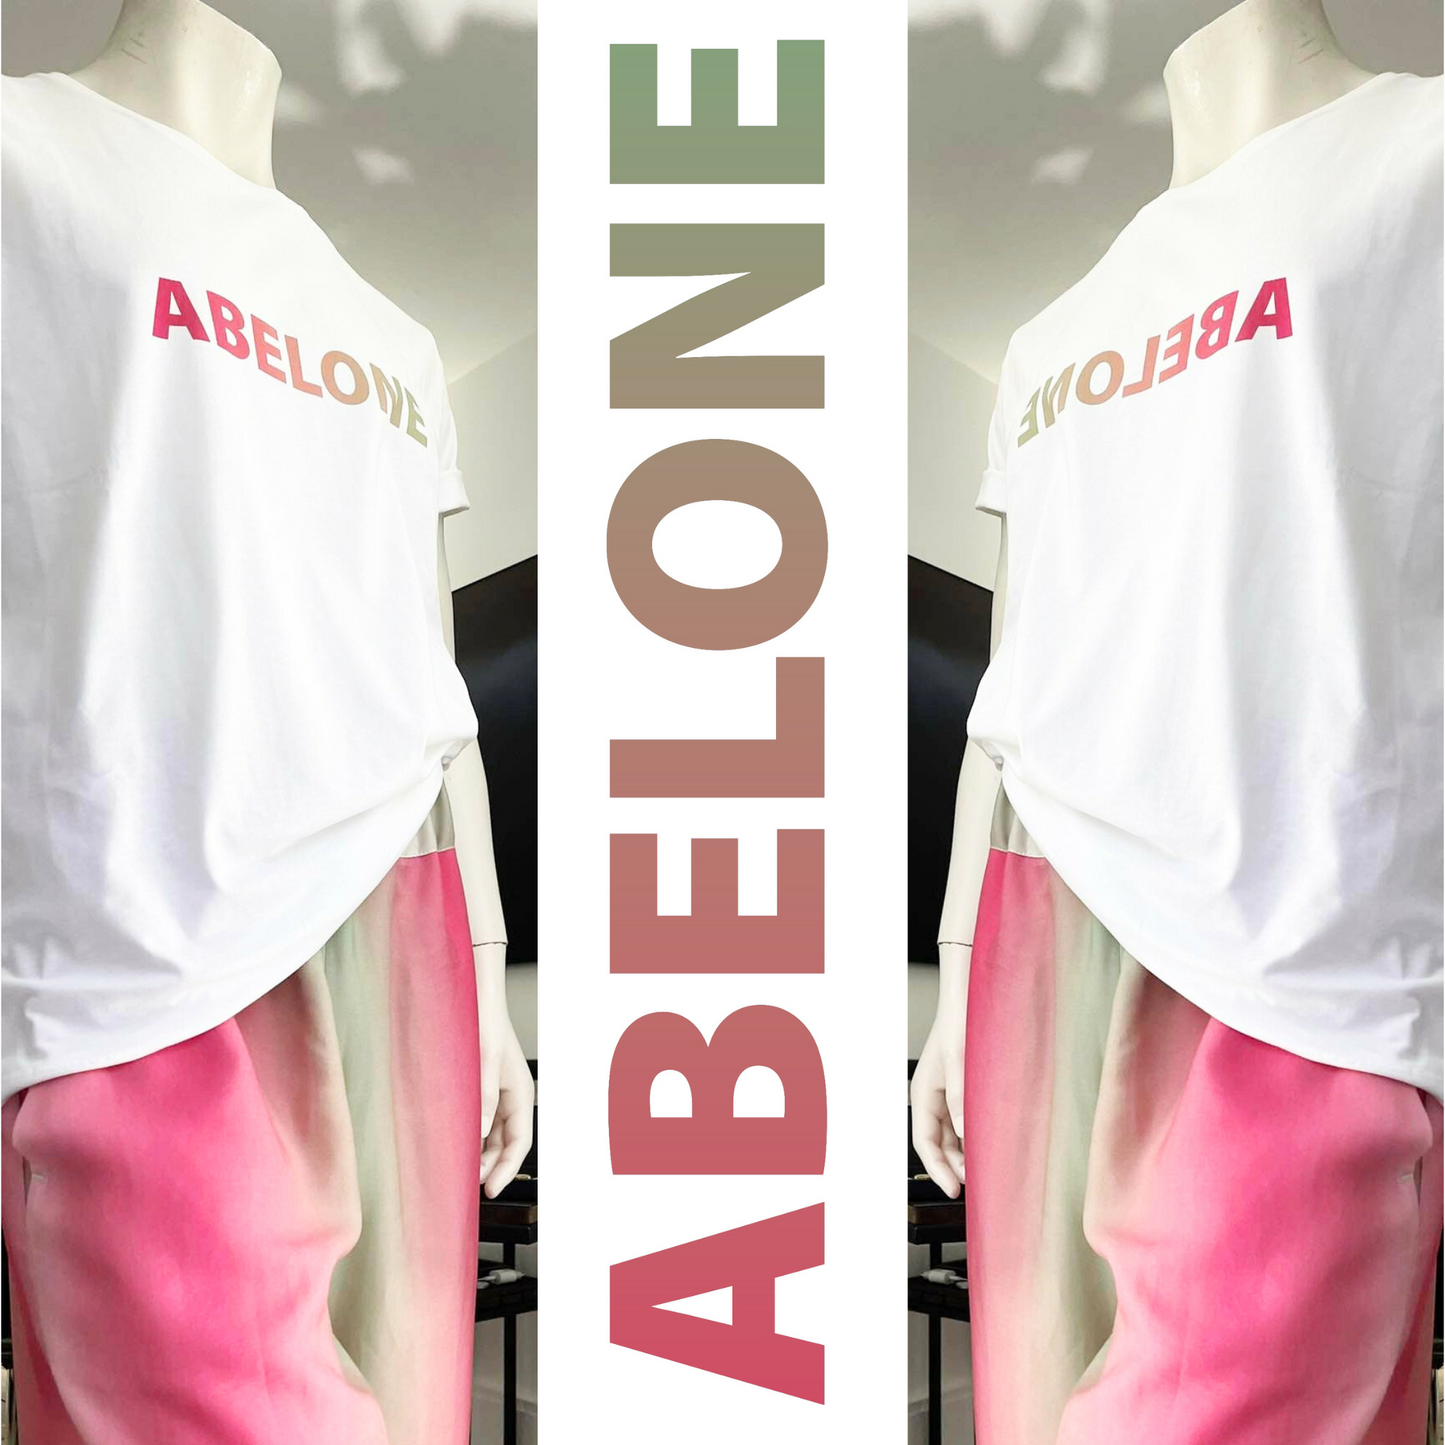 ABELONE T-shirt - White